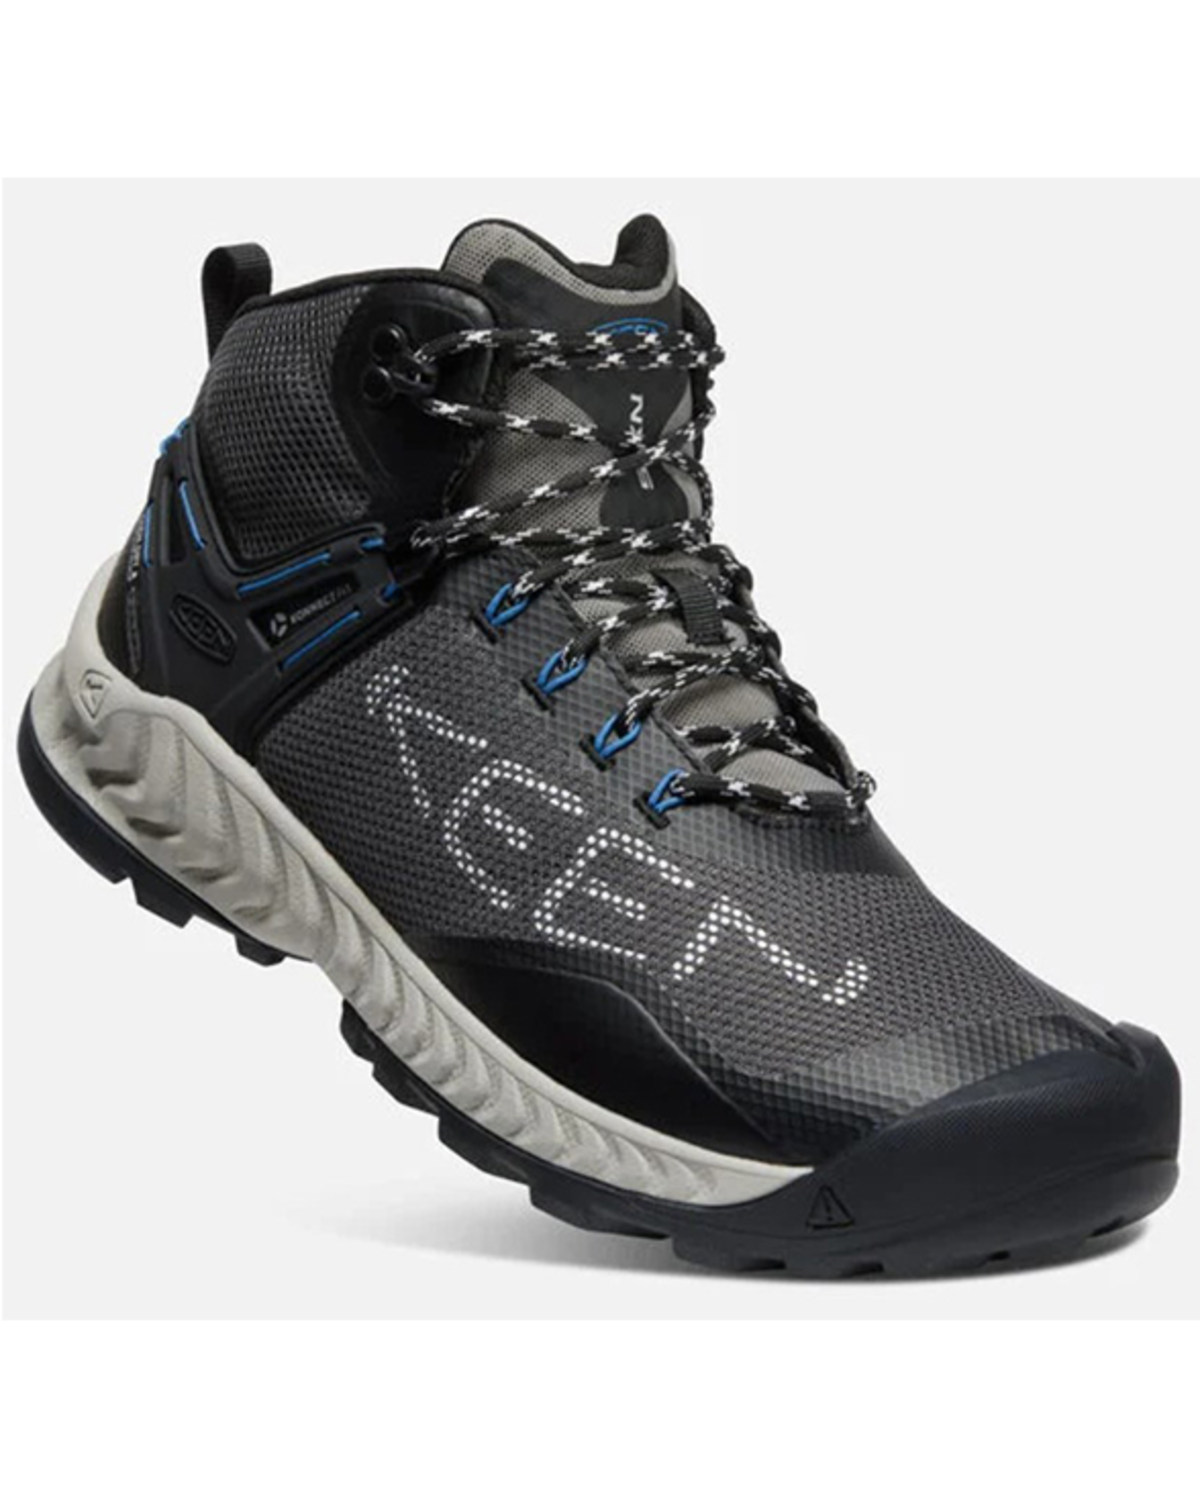 Keen Men's NXIS EVO Waterproof Hiking Boots